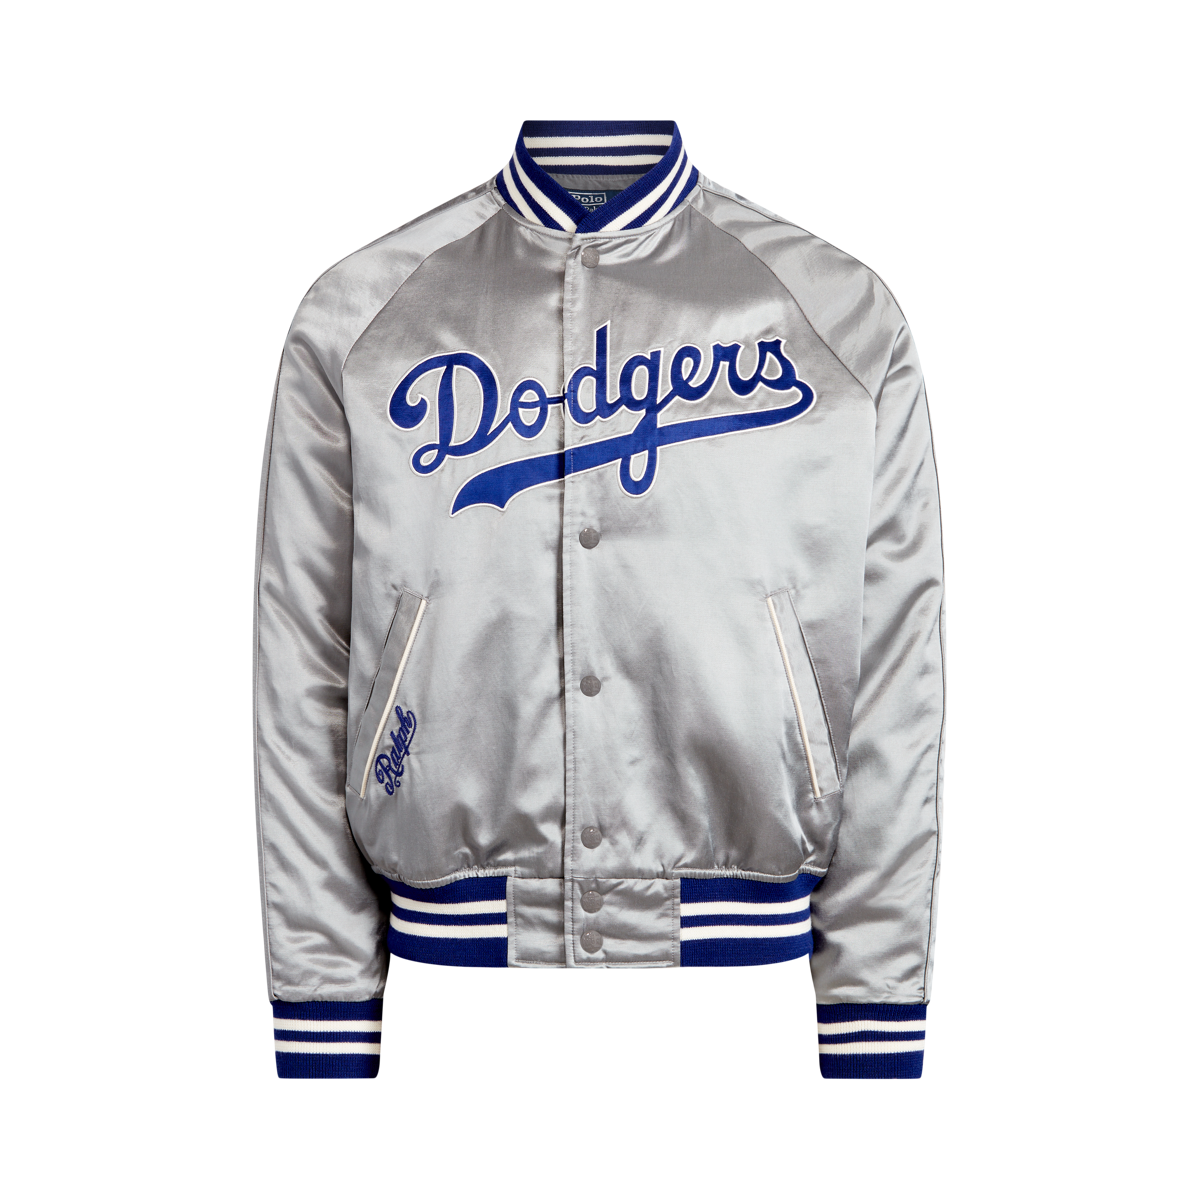 Dodgers Denim Jacket-Sports Jacket-MLB-Custom Denim Jacket-Dodgers-Los  angeles- LA Dodgers-Baseball-Baseball apparel